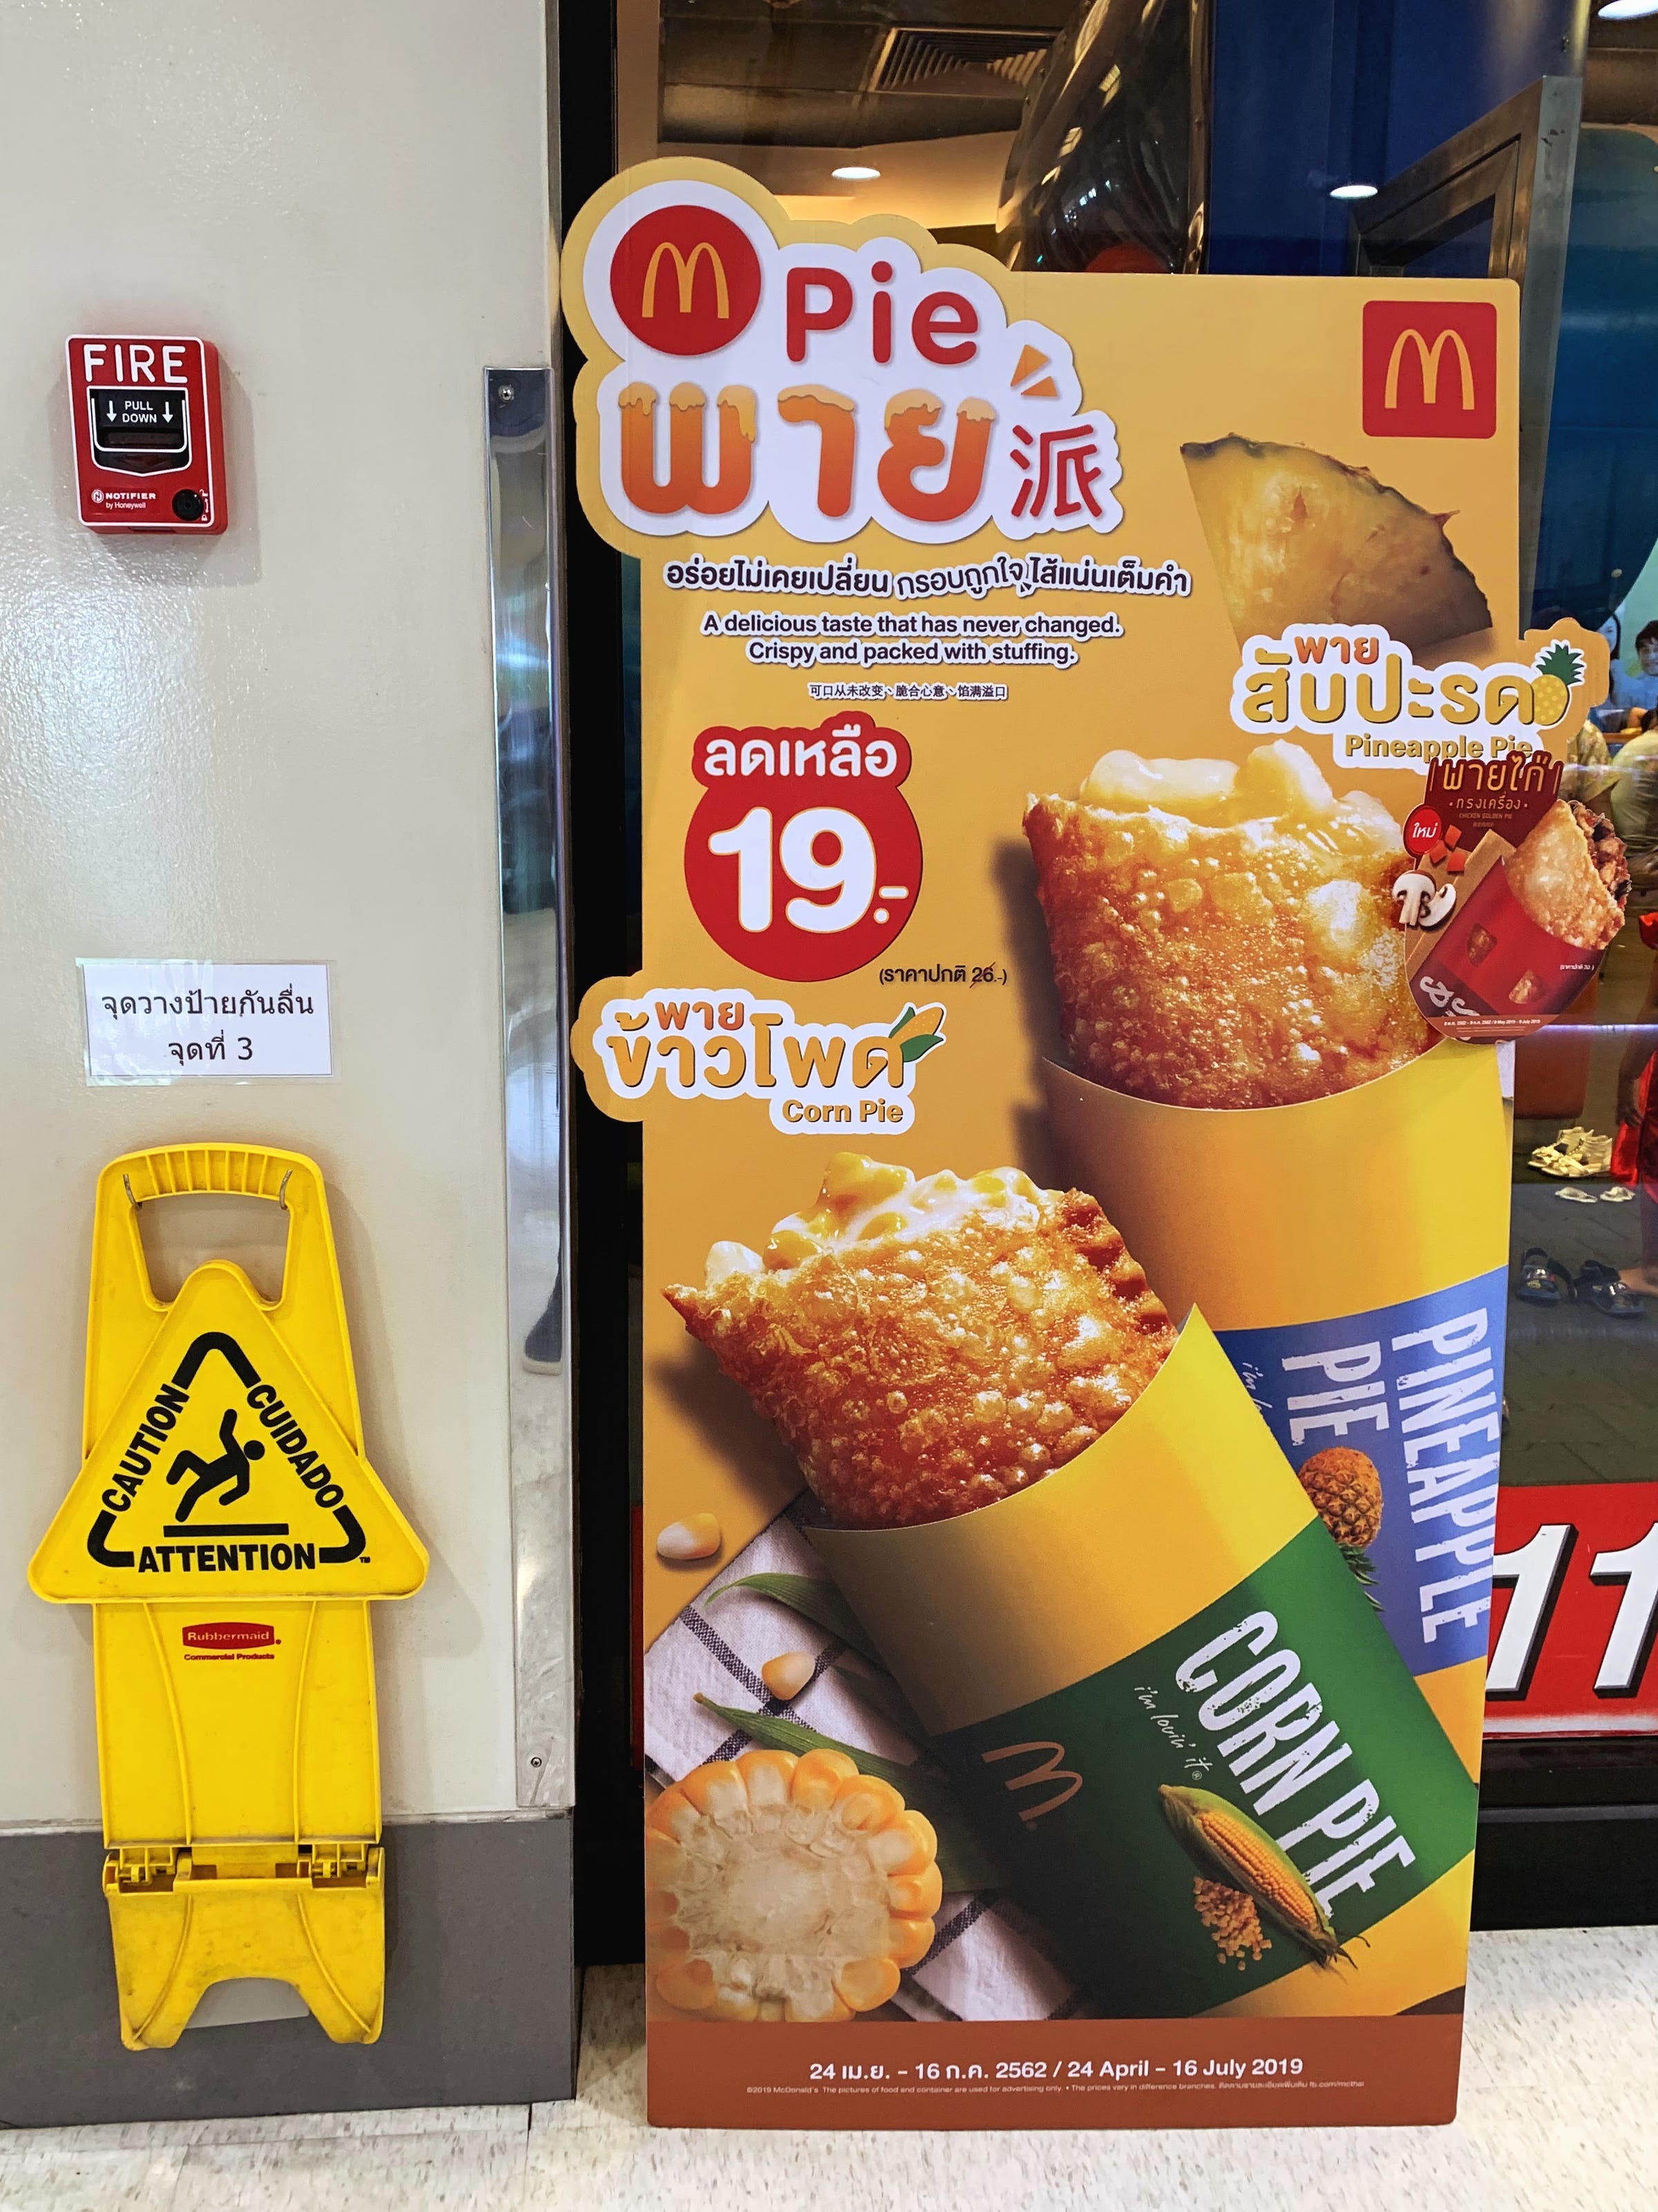 Sign of McDonald's pies in Bangkok, Thailand